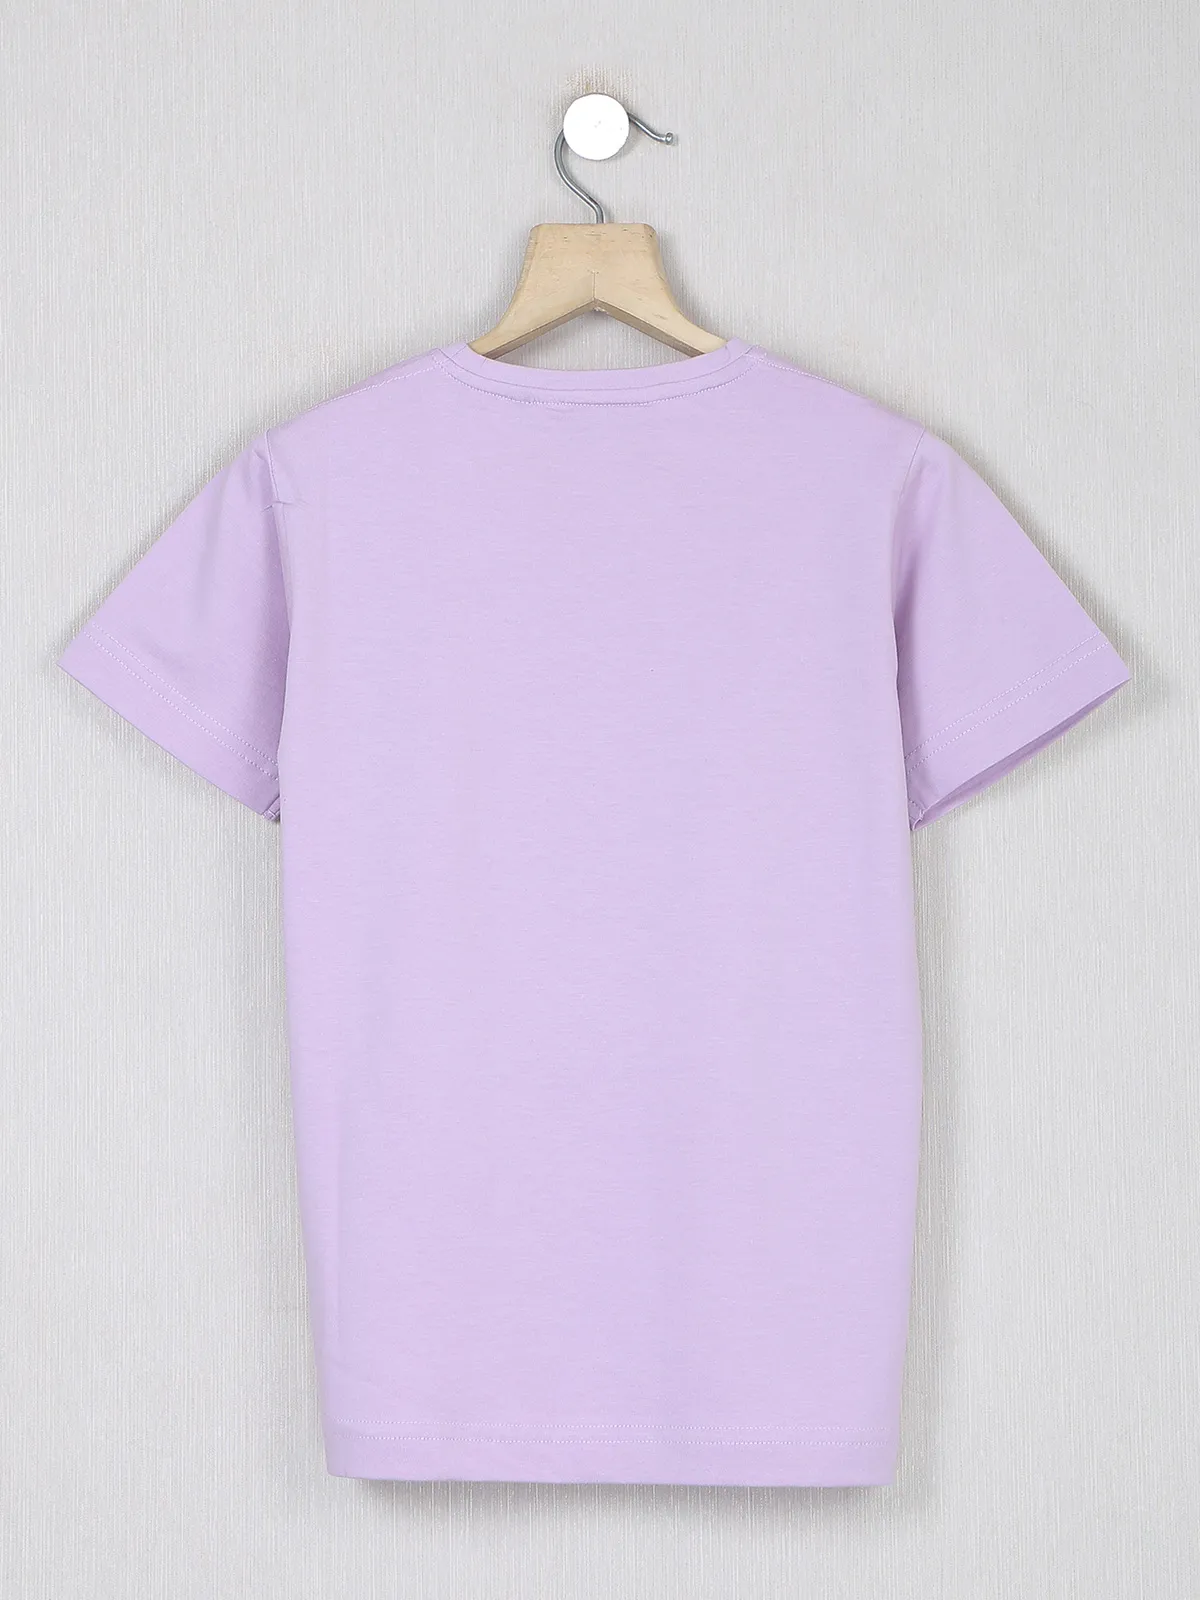 Ruff light purple shade cotton boys t shirt